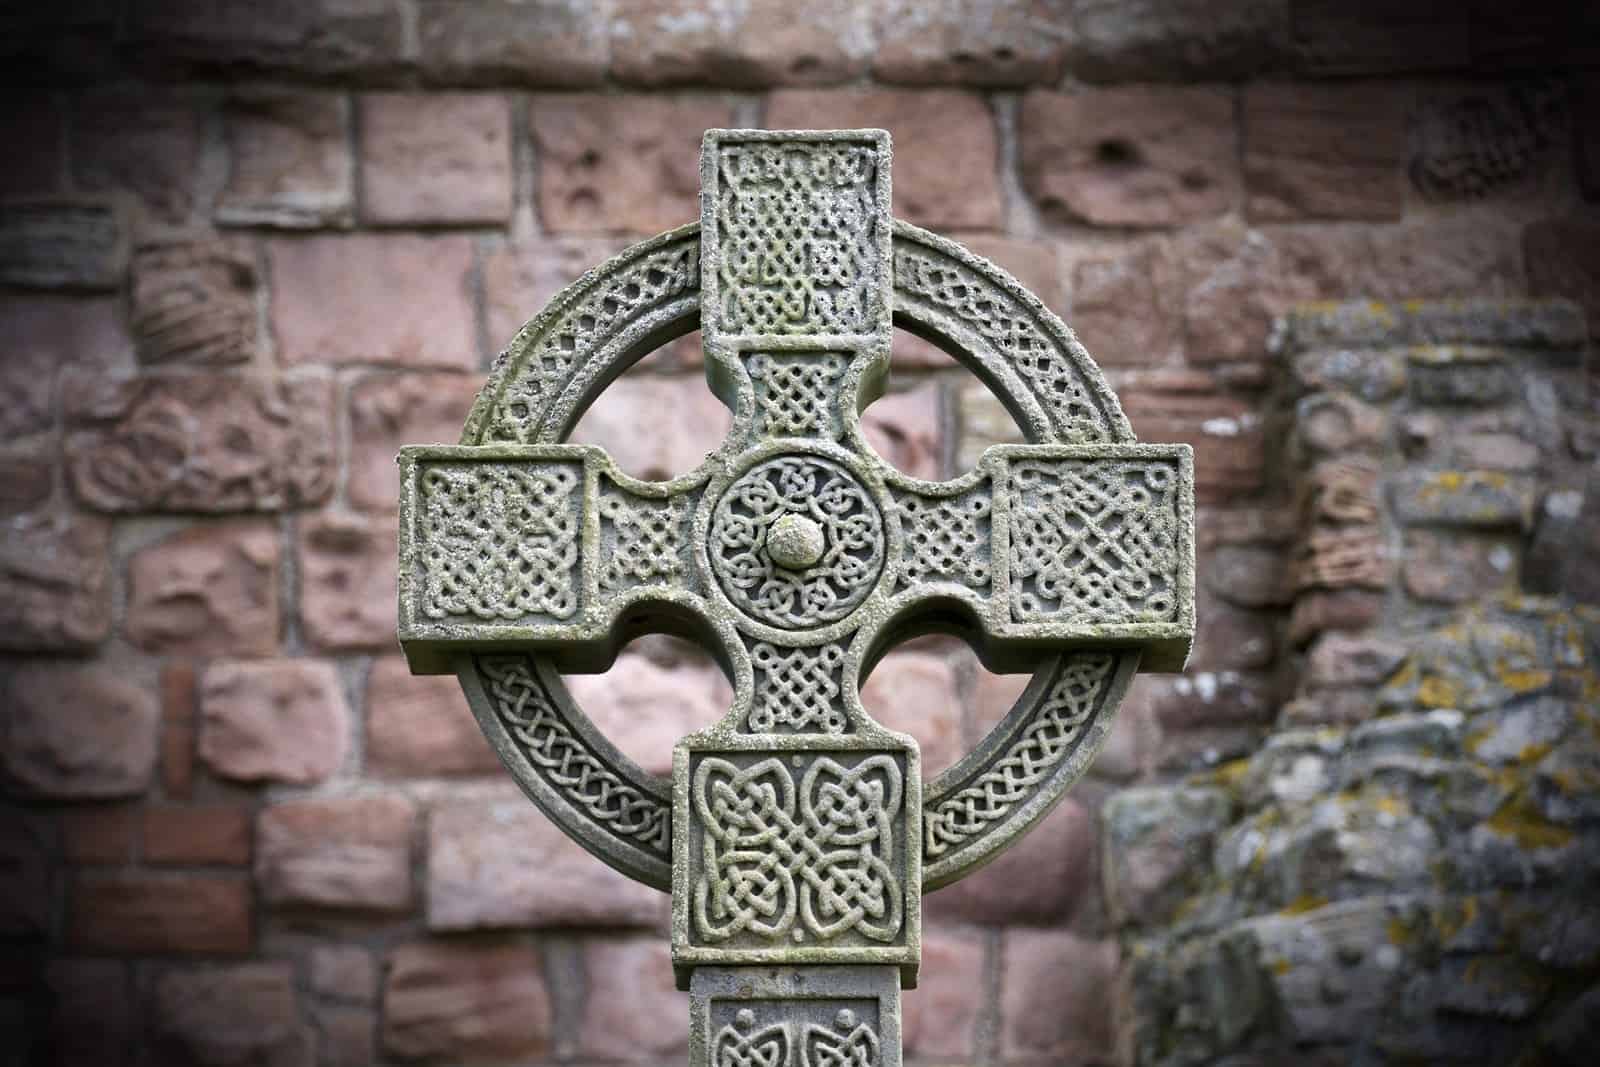 The Celtic Cross